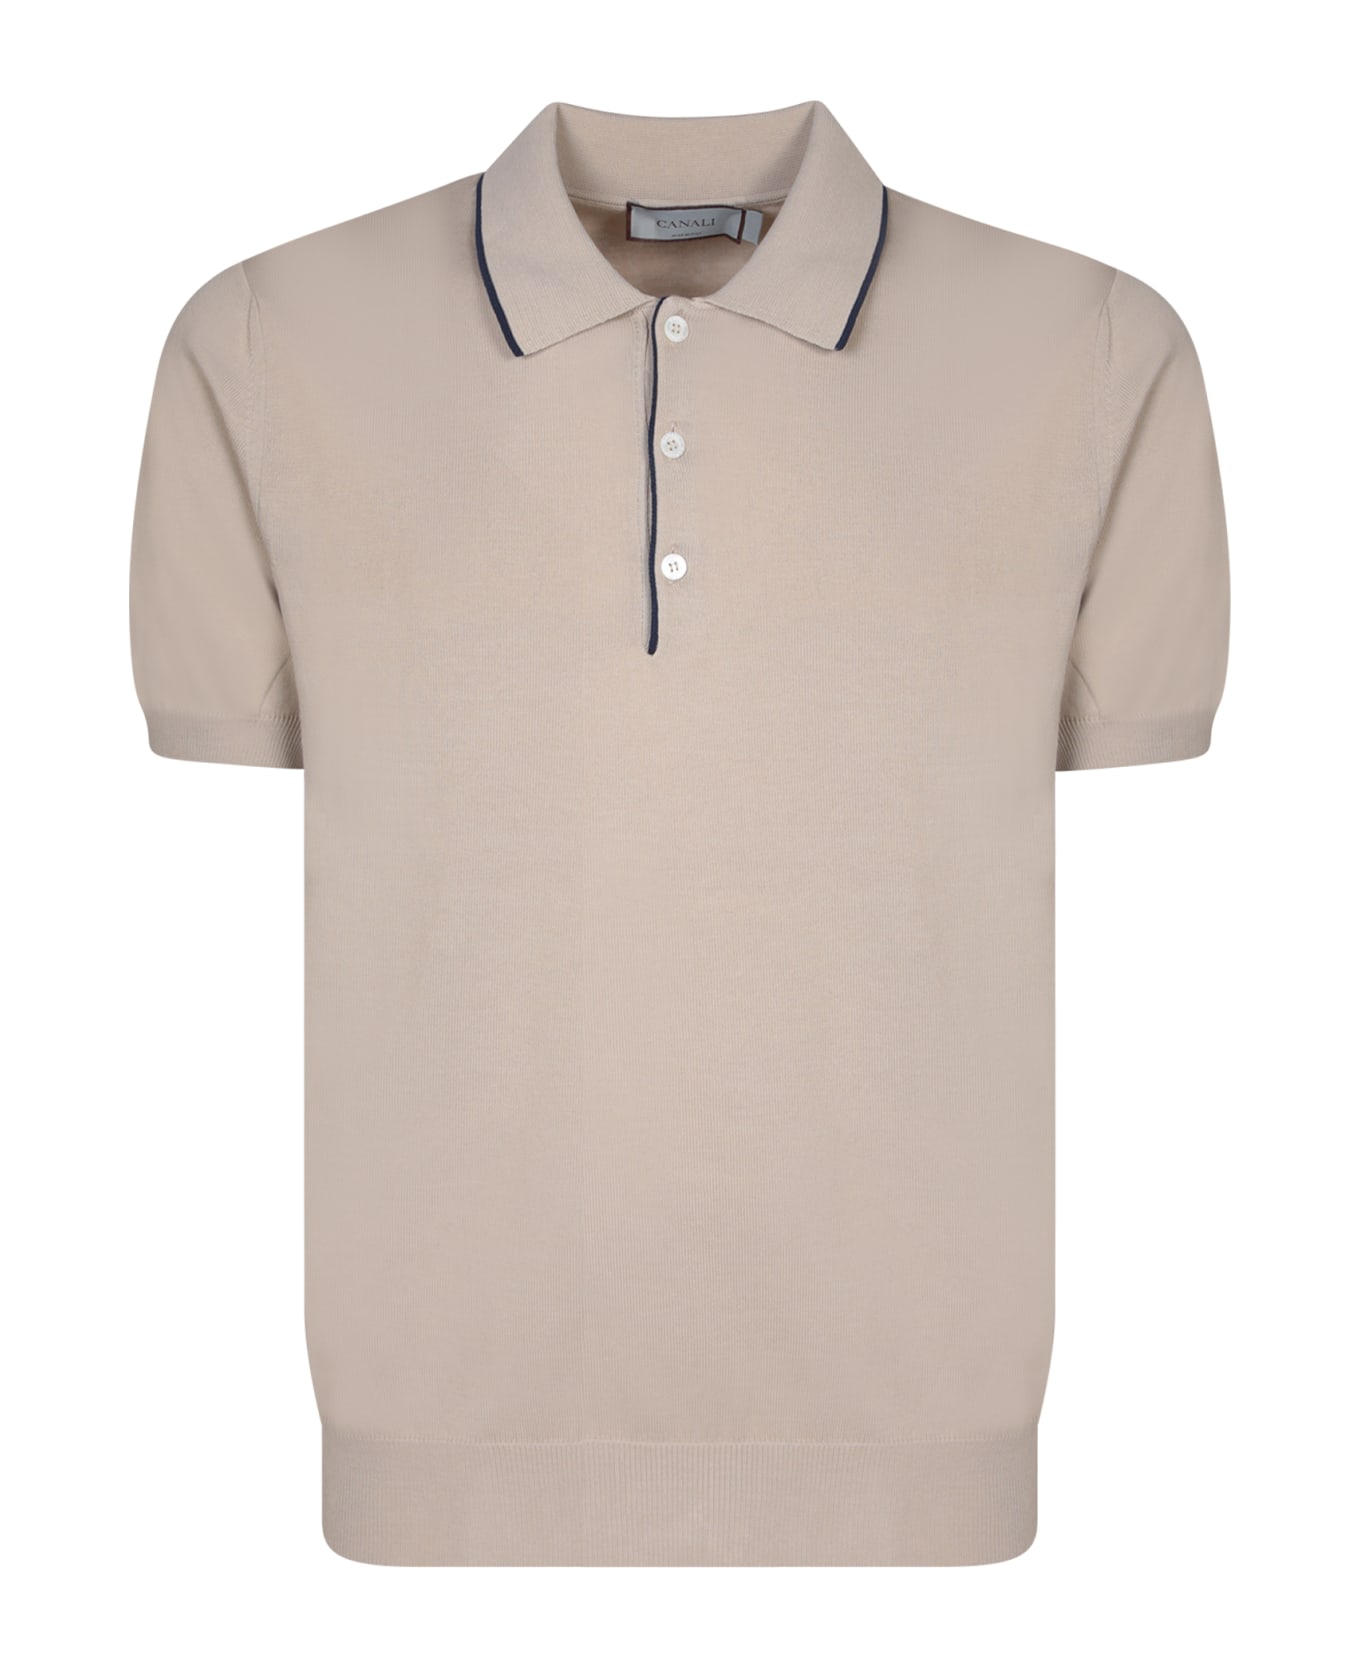 Canali Edges Blue/beige Polo Shirt - Beige